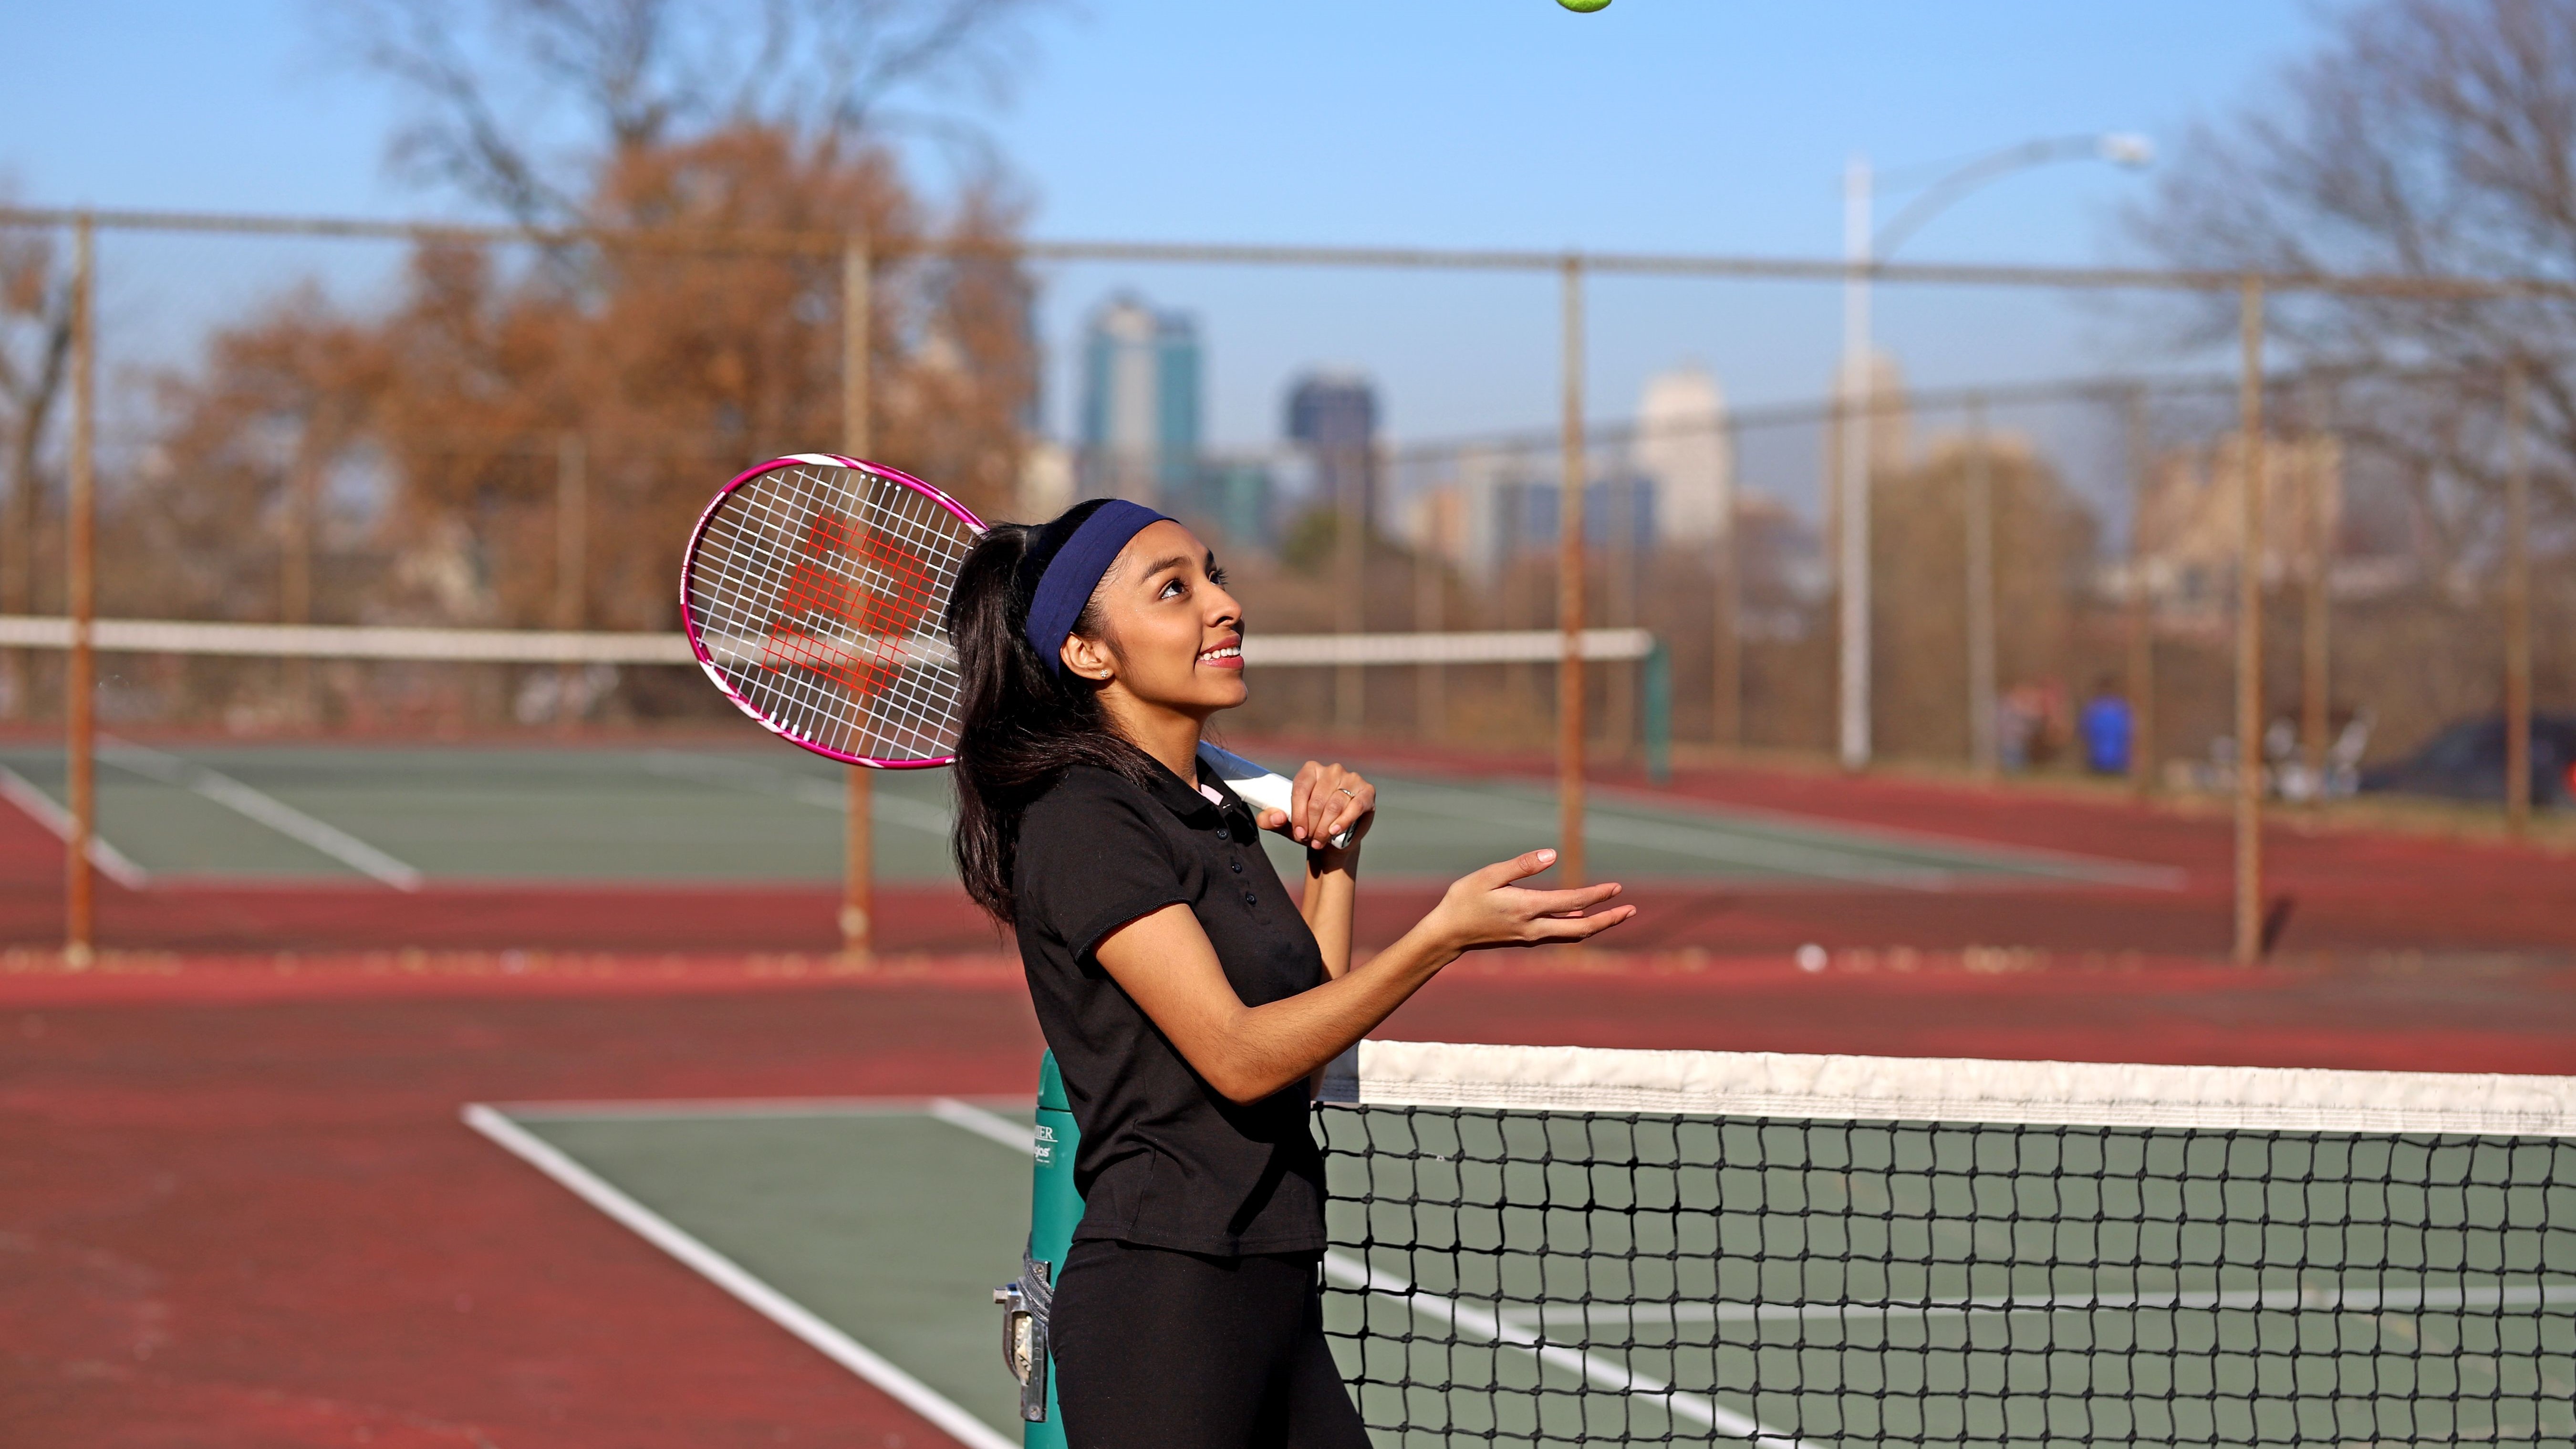 Penn Valley Park Tennis Courts